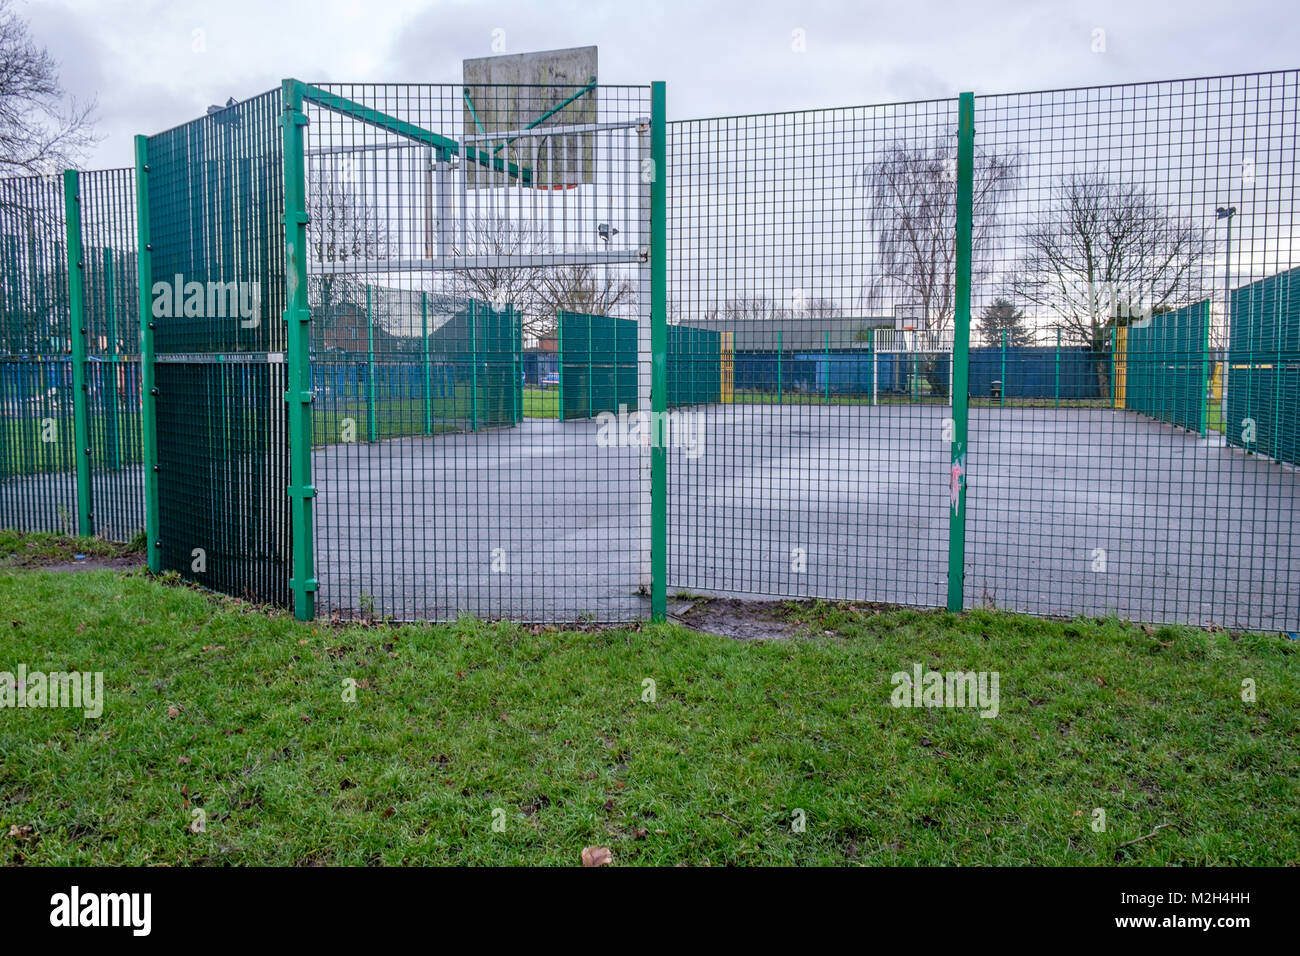 An empty basketball area where children play Stock Photo